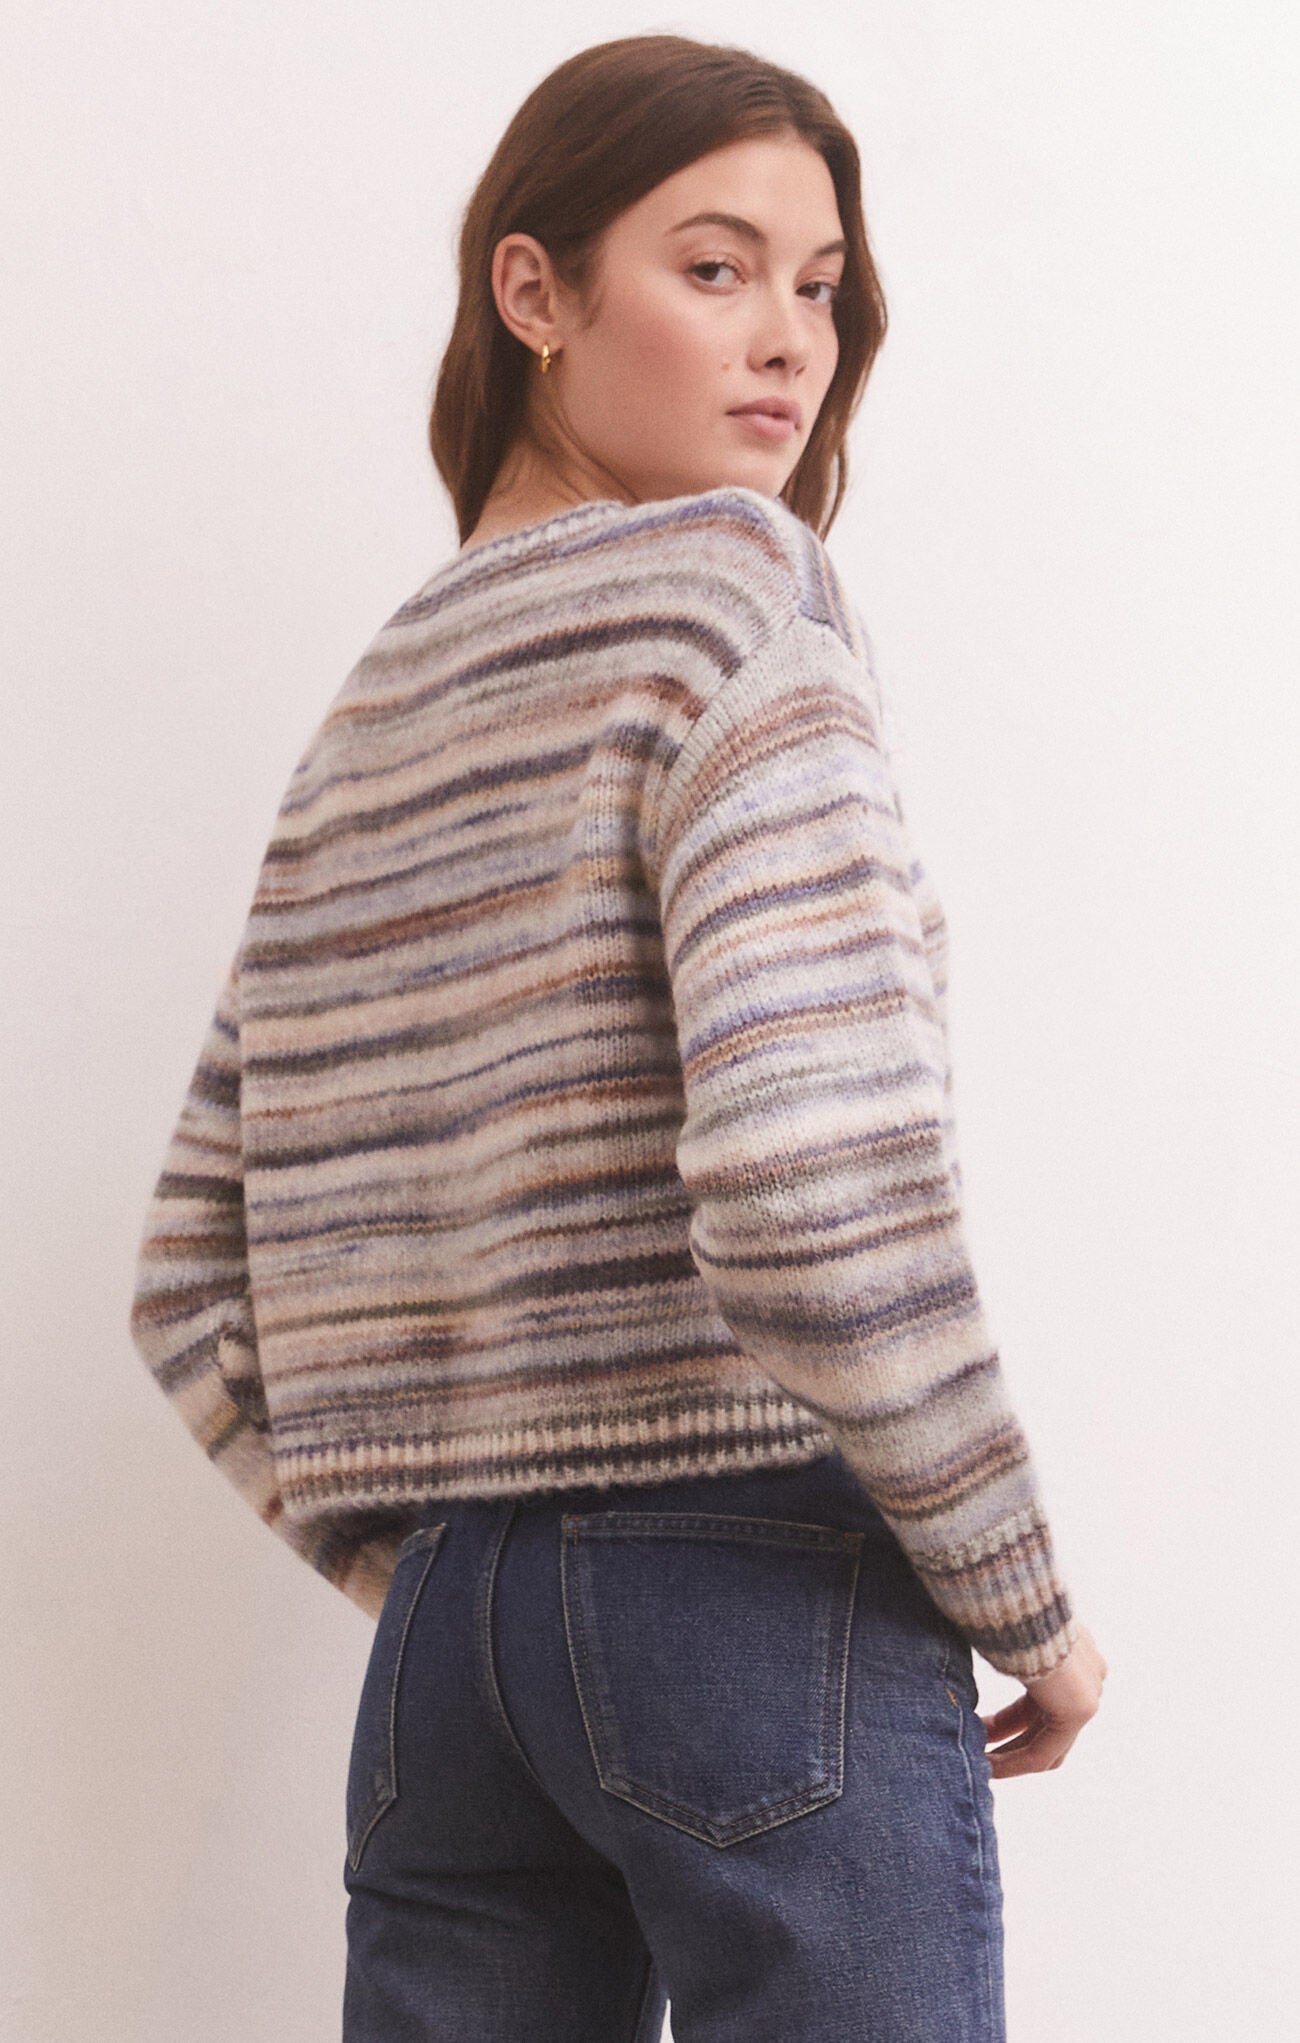 Z Supply Corbin Pullover SweaterSweater